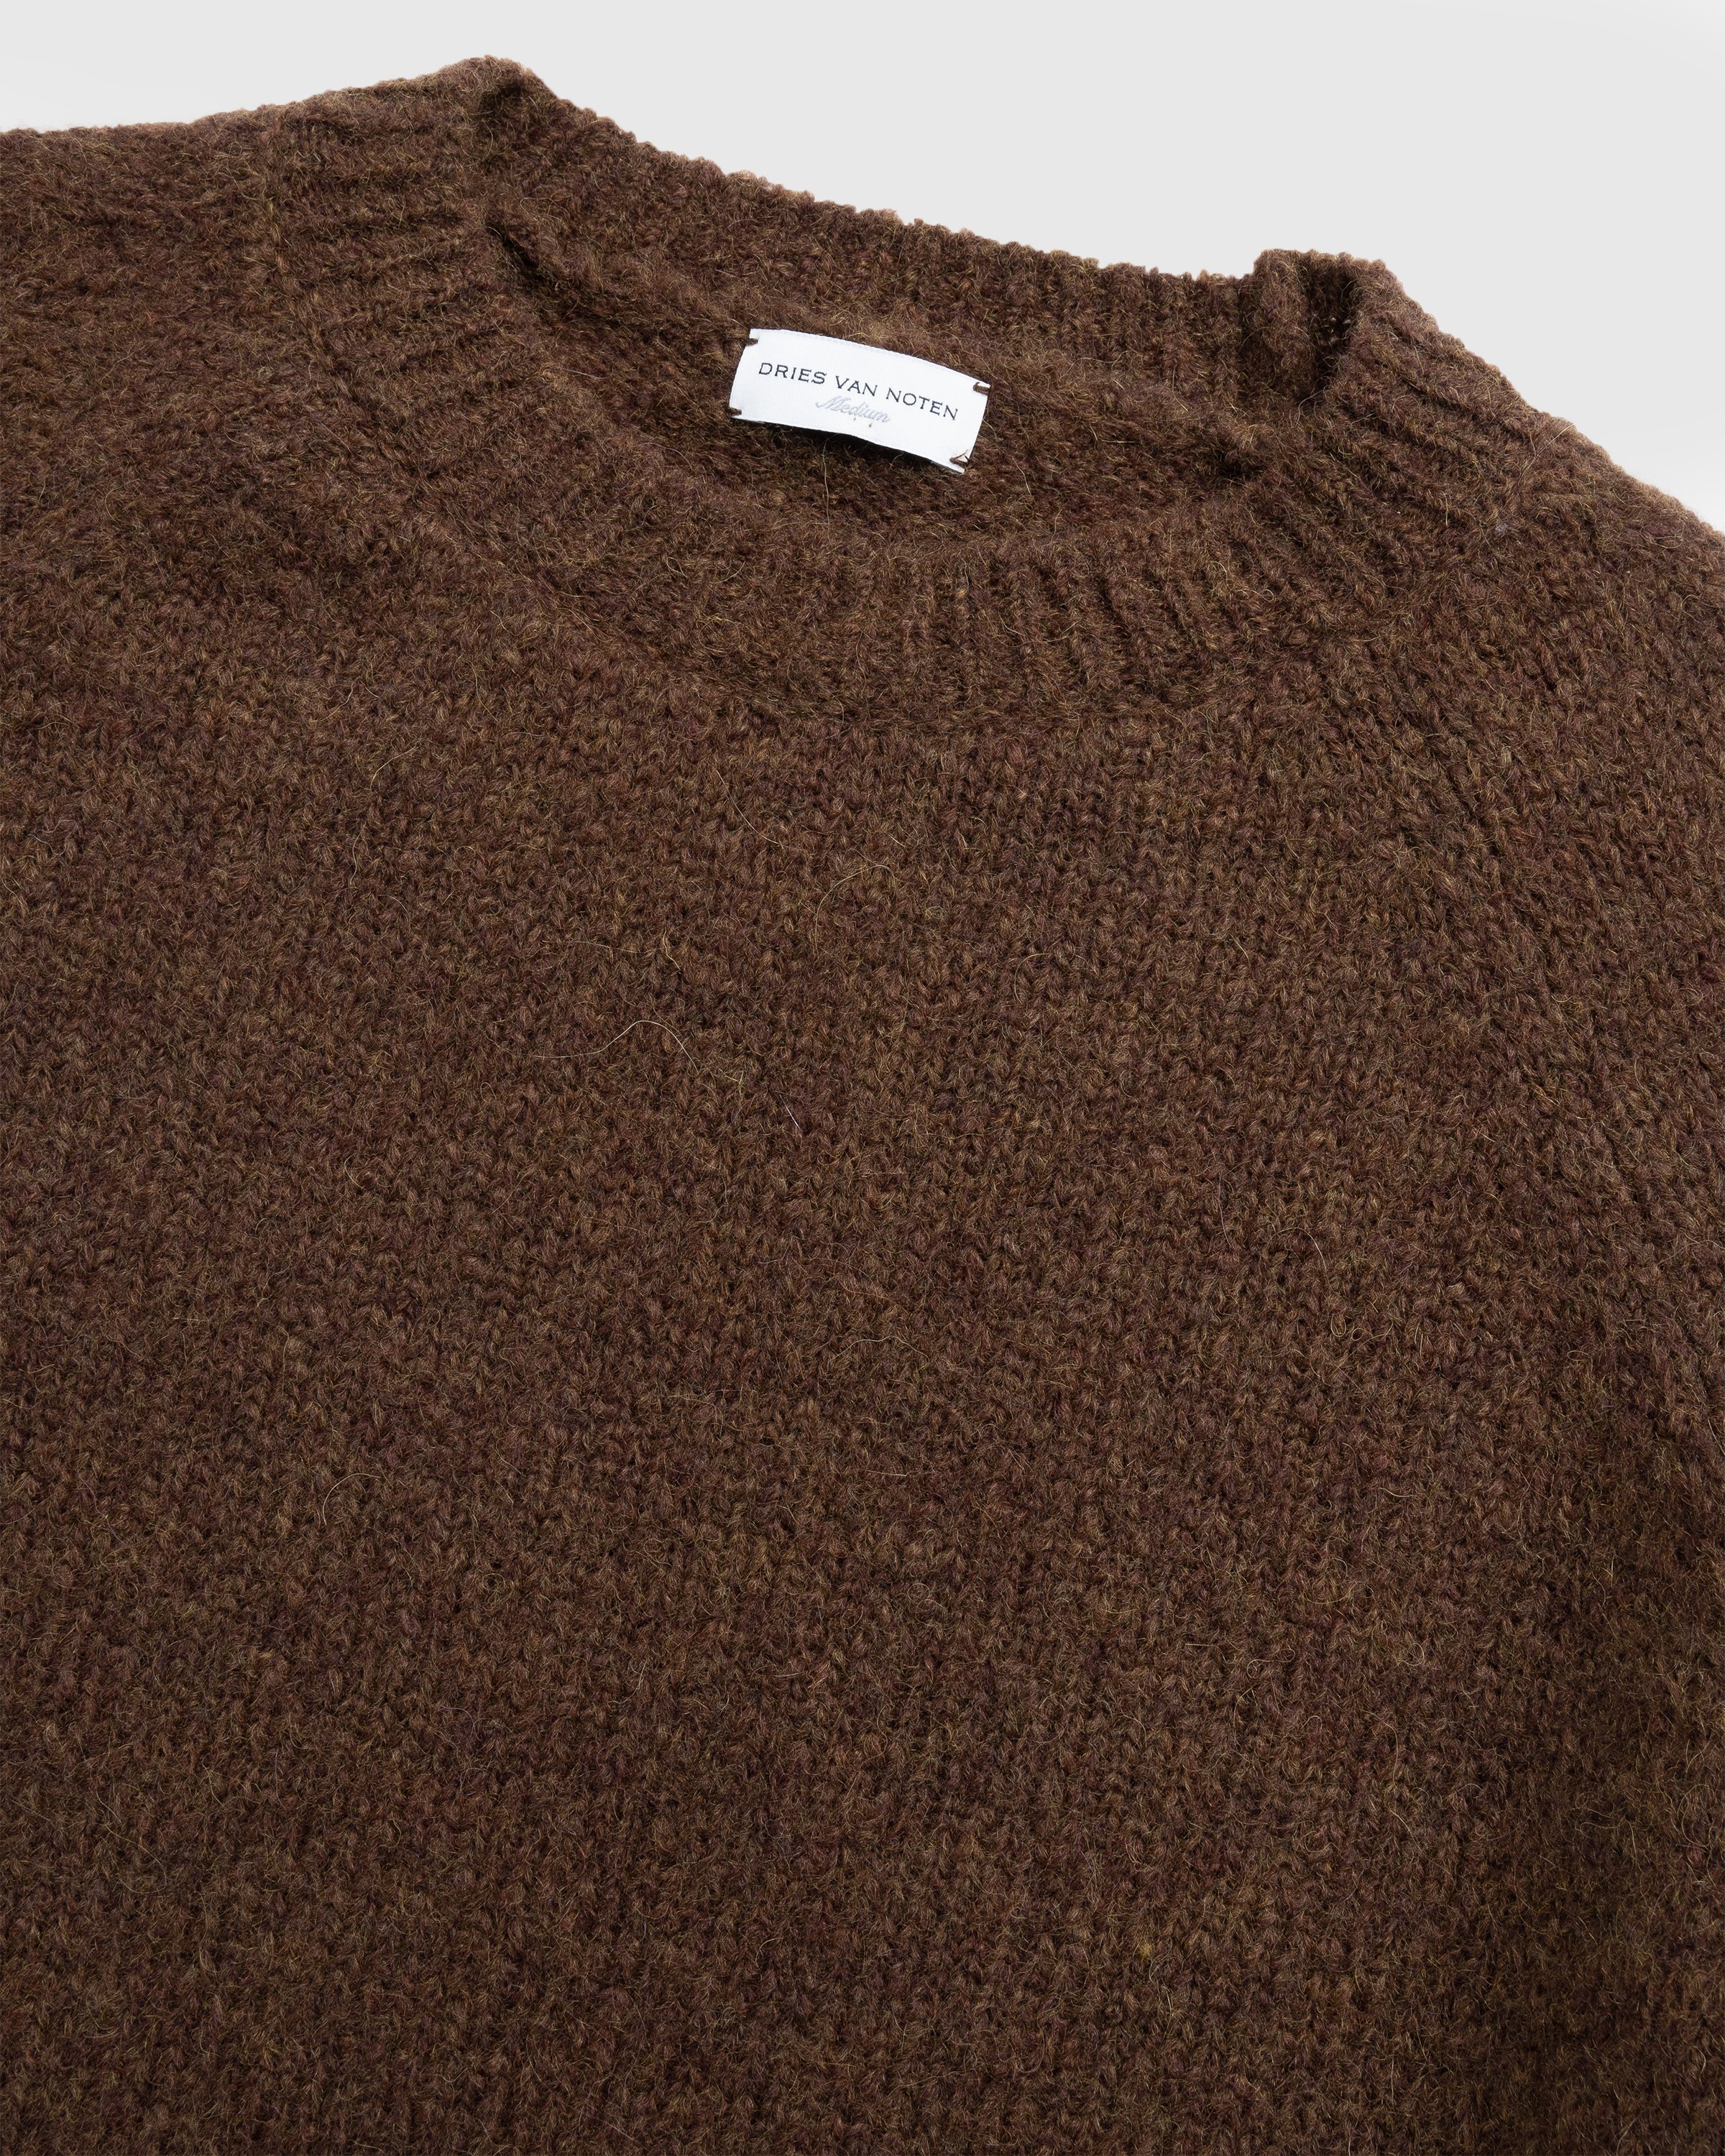 Dries van Noten - Melbourne Knit Brown - Clothing - Brown - Image 5